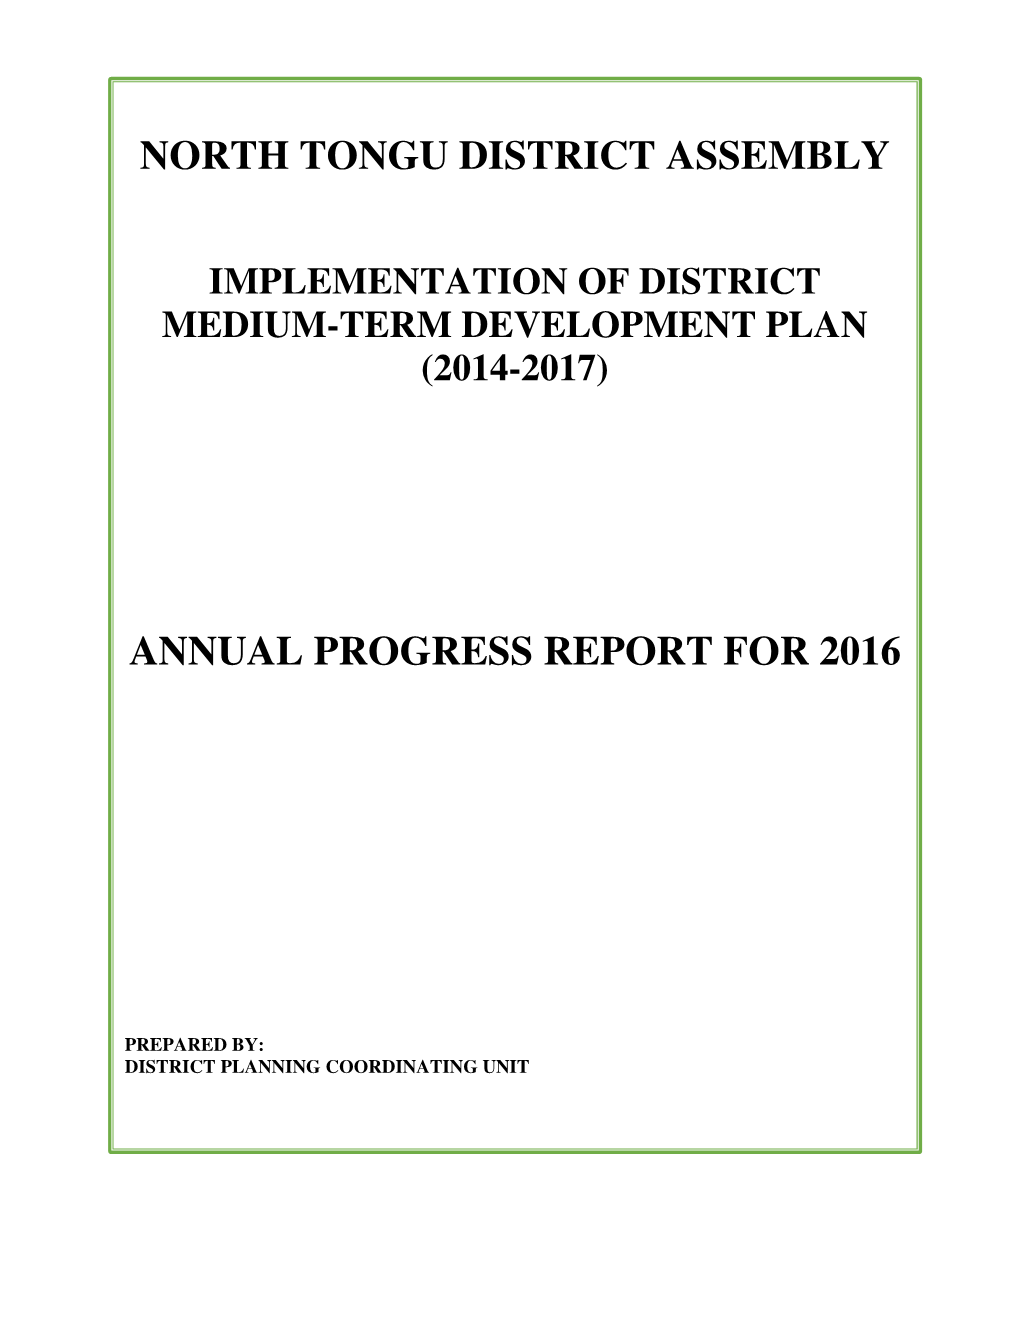 North Tongu District Assembly Annual Progress